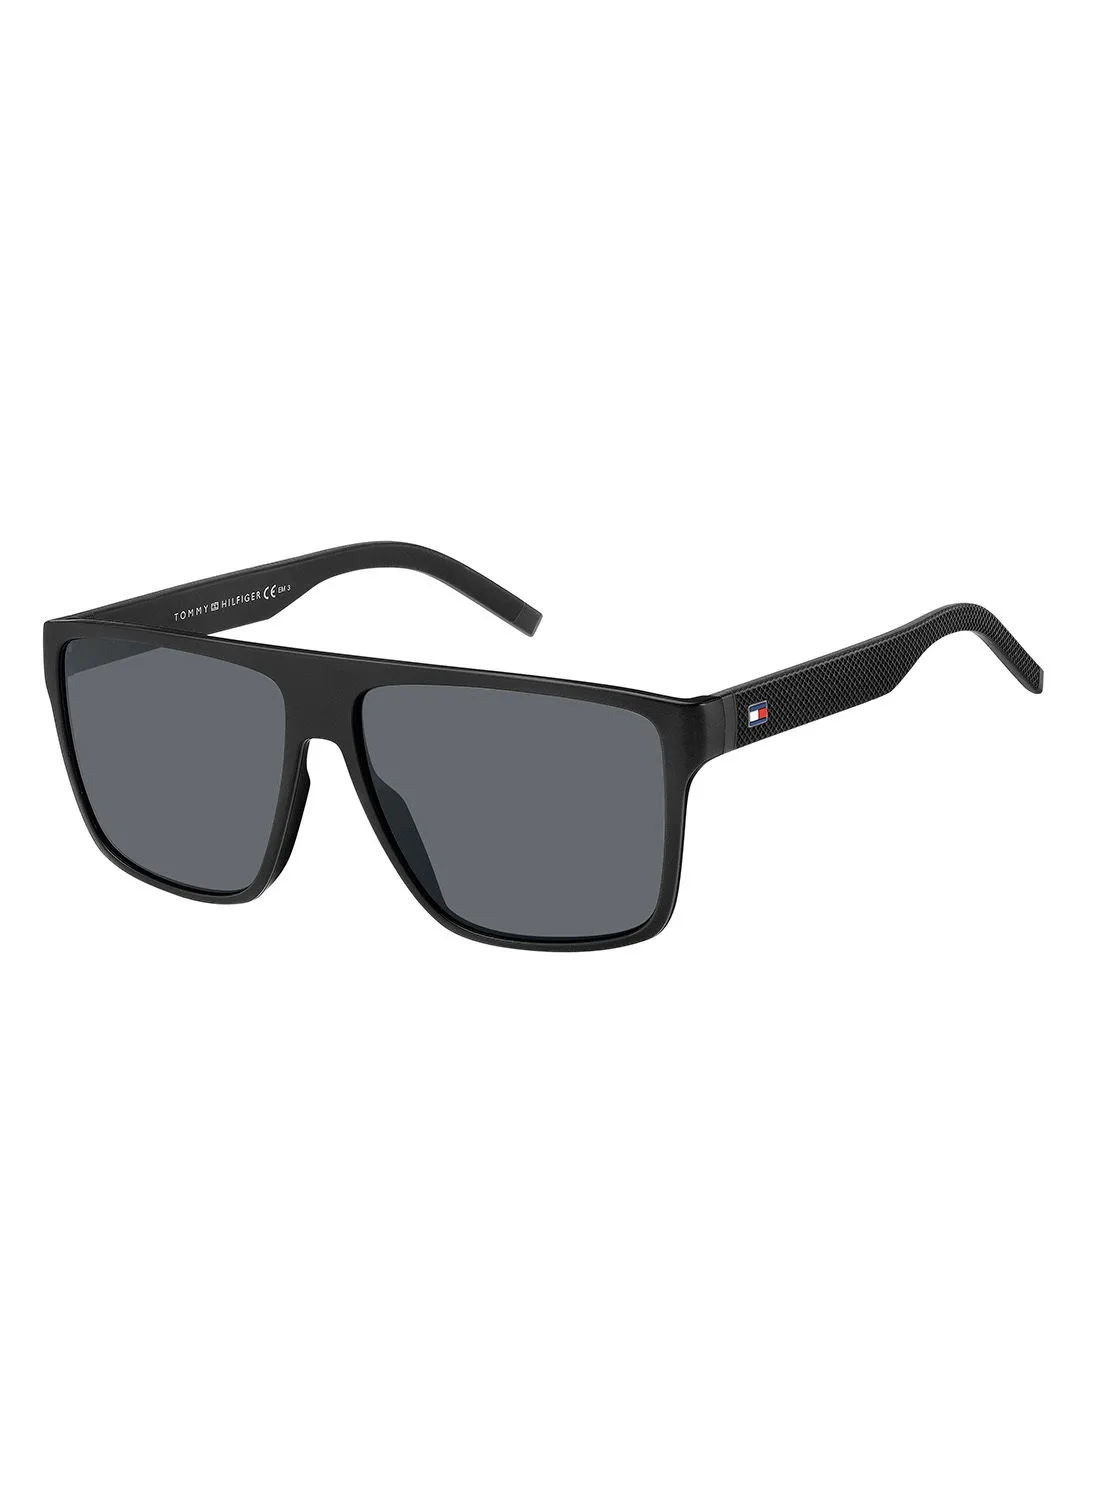 TOMMY HILFIGER Men's Rectangular Sunglasses 202799